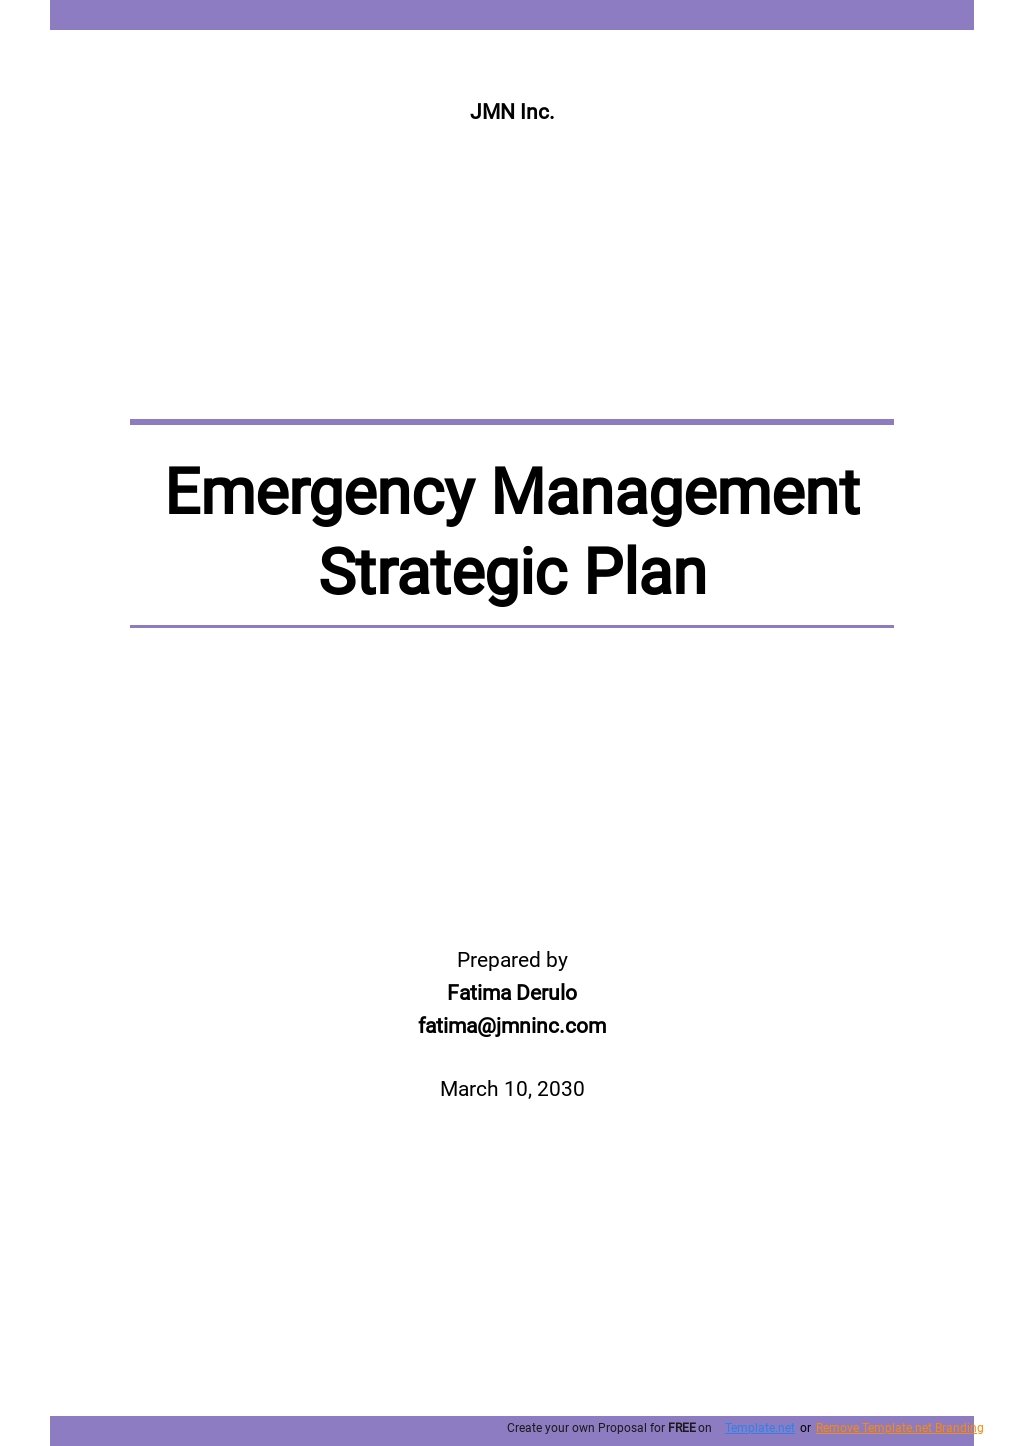 Emergency Management Strategic Plan Template.jpe